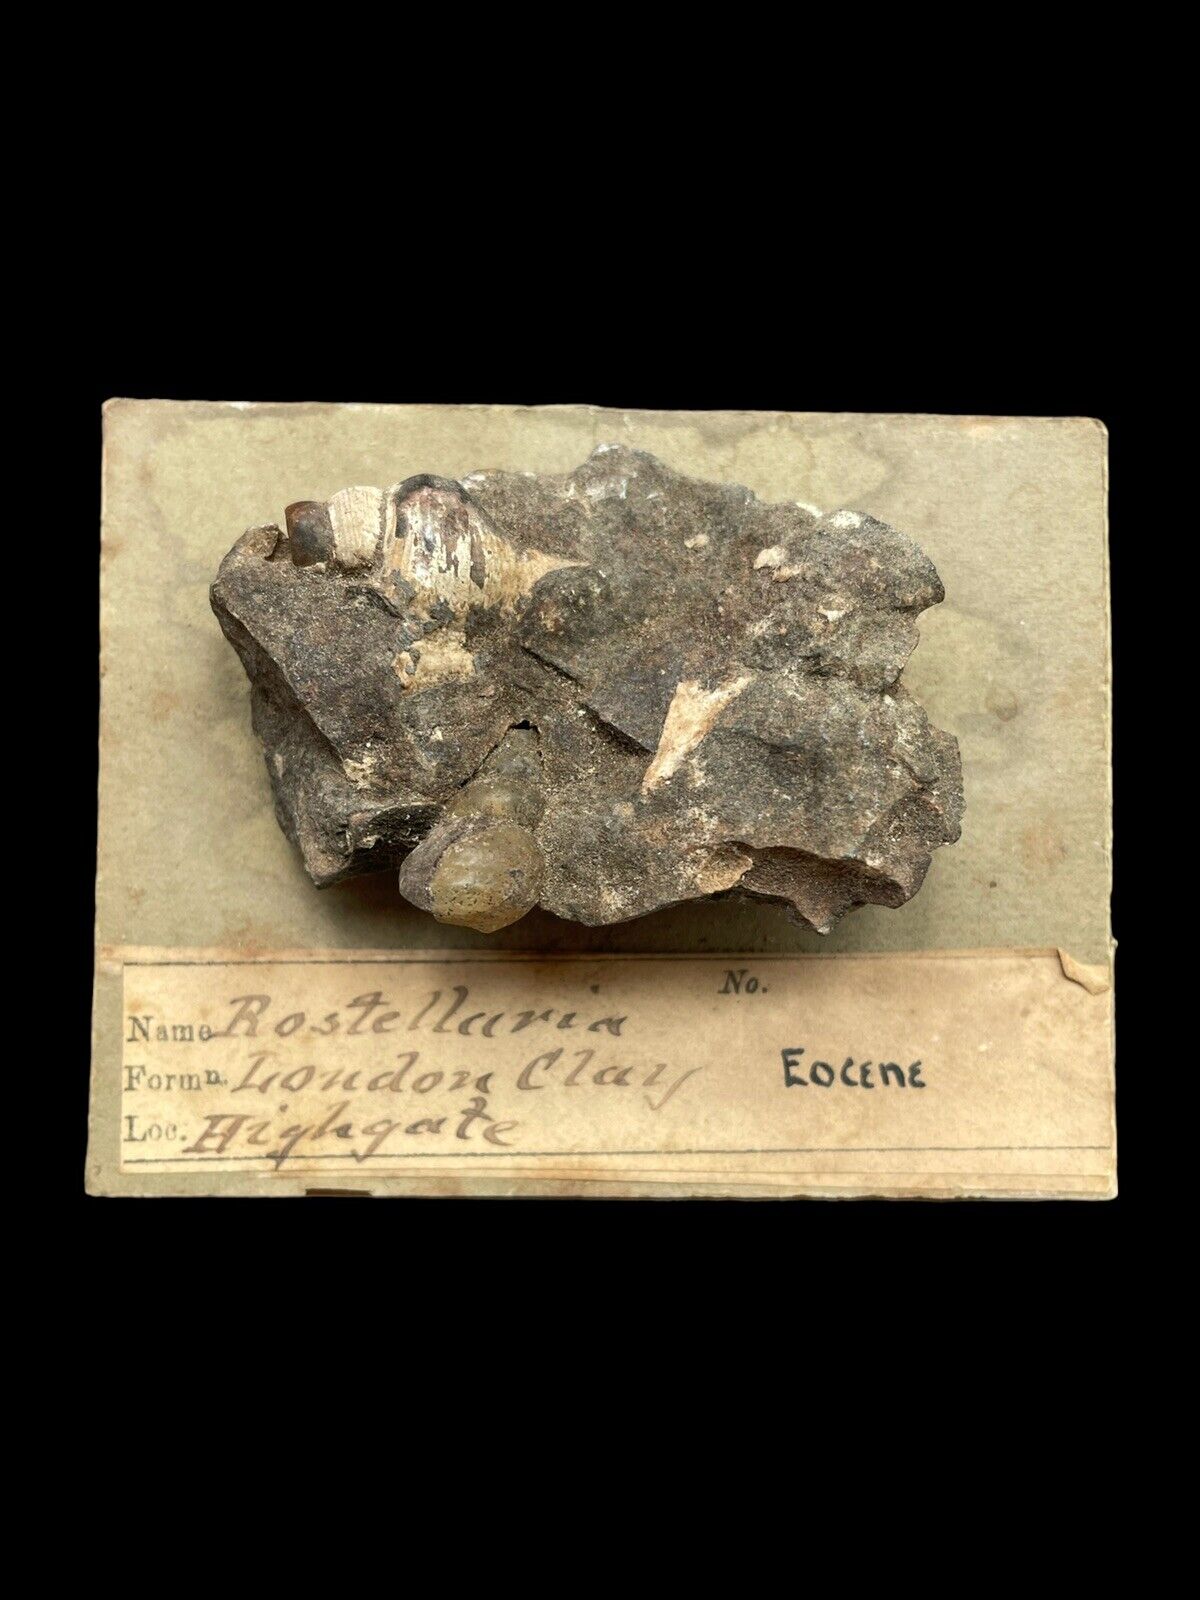 Rare London Clay Gastropod Rostellaria - Victorian Specimen - Highgate, London 